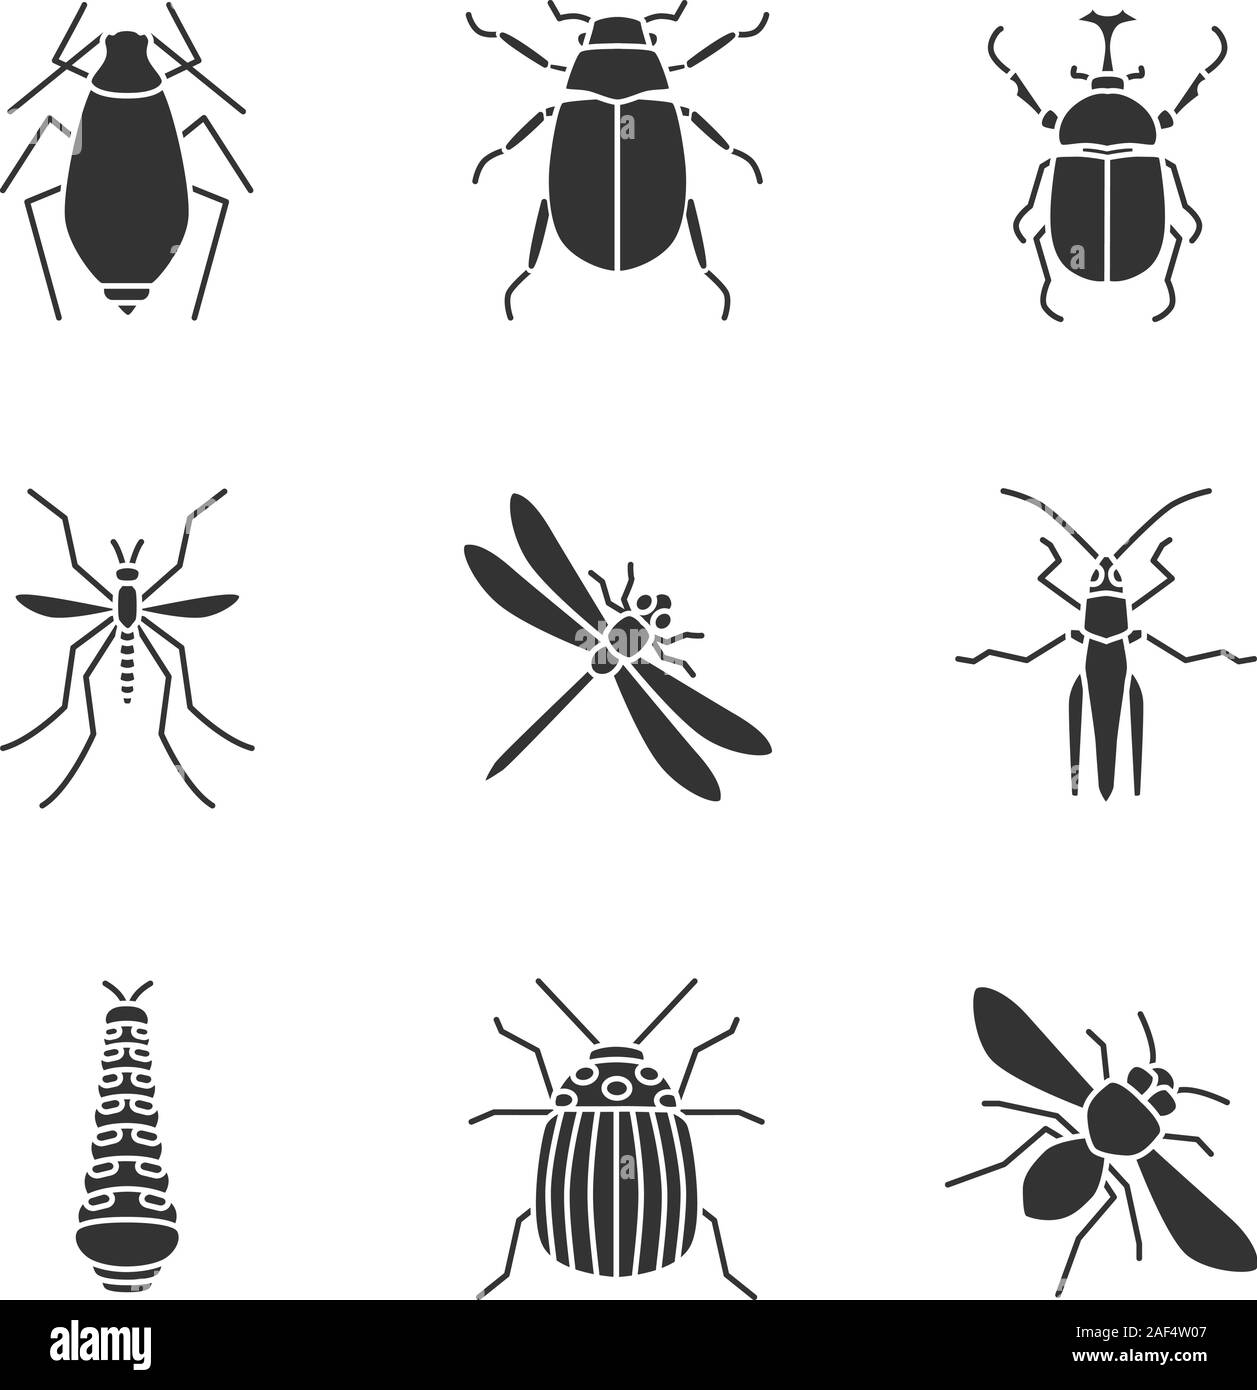 Insekten Glyphe Symbole gesetzt. Blattlaus, maybug, Hercules bug, Mosquito, Libelle, Caterpillar, Coloradokäfer, Grashüpfer, Honig Biene. Silhouette Symbole. V Stock Vektor